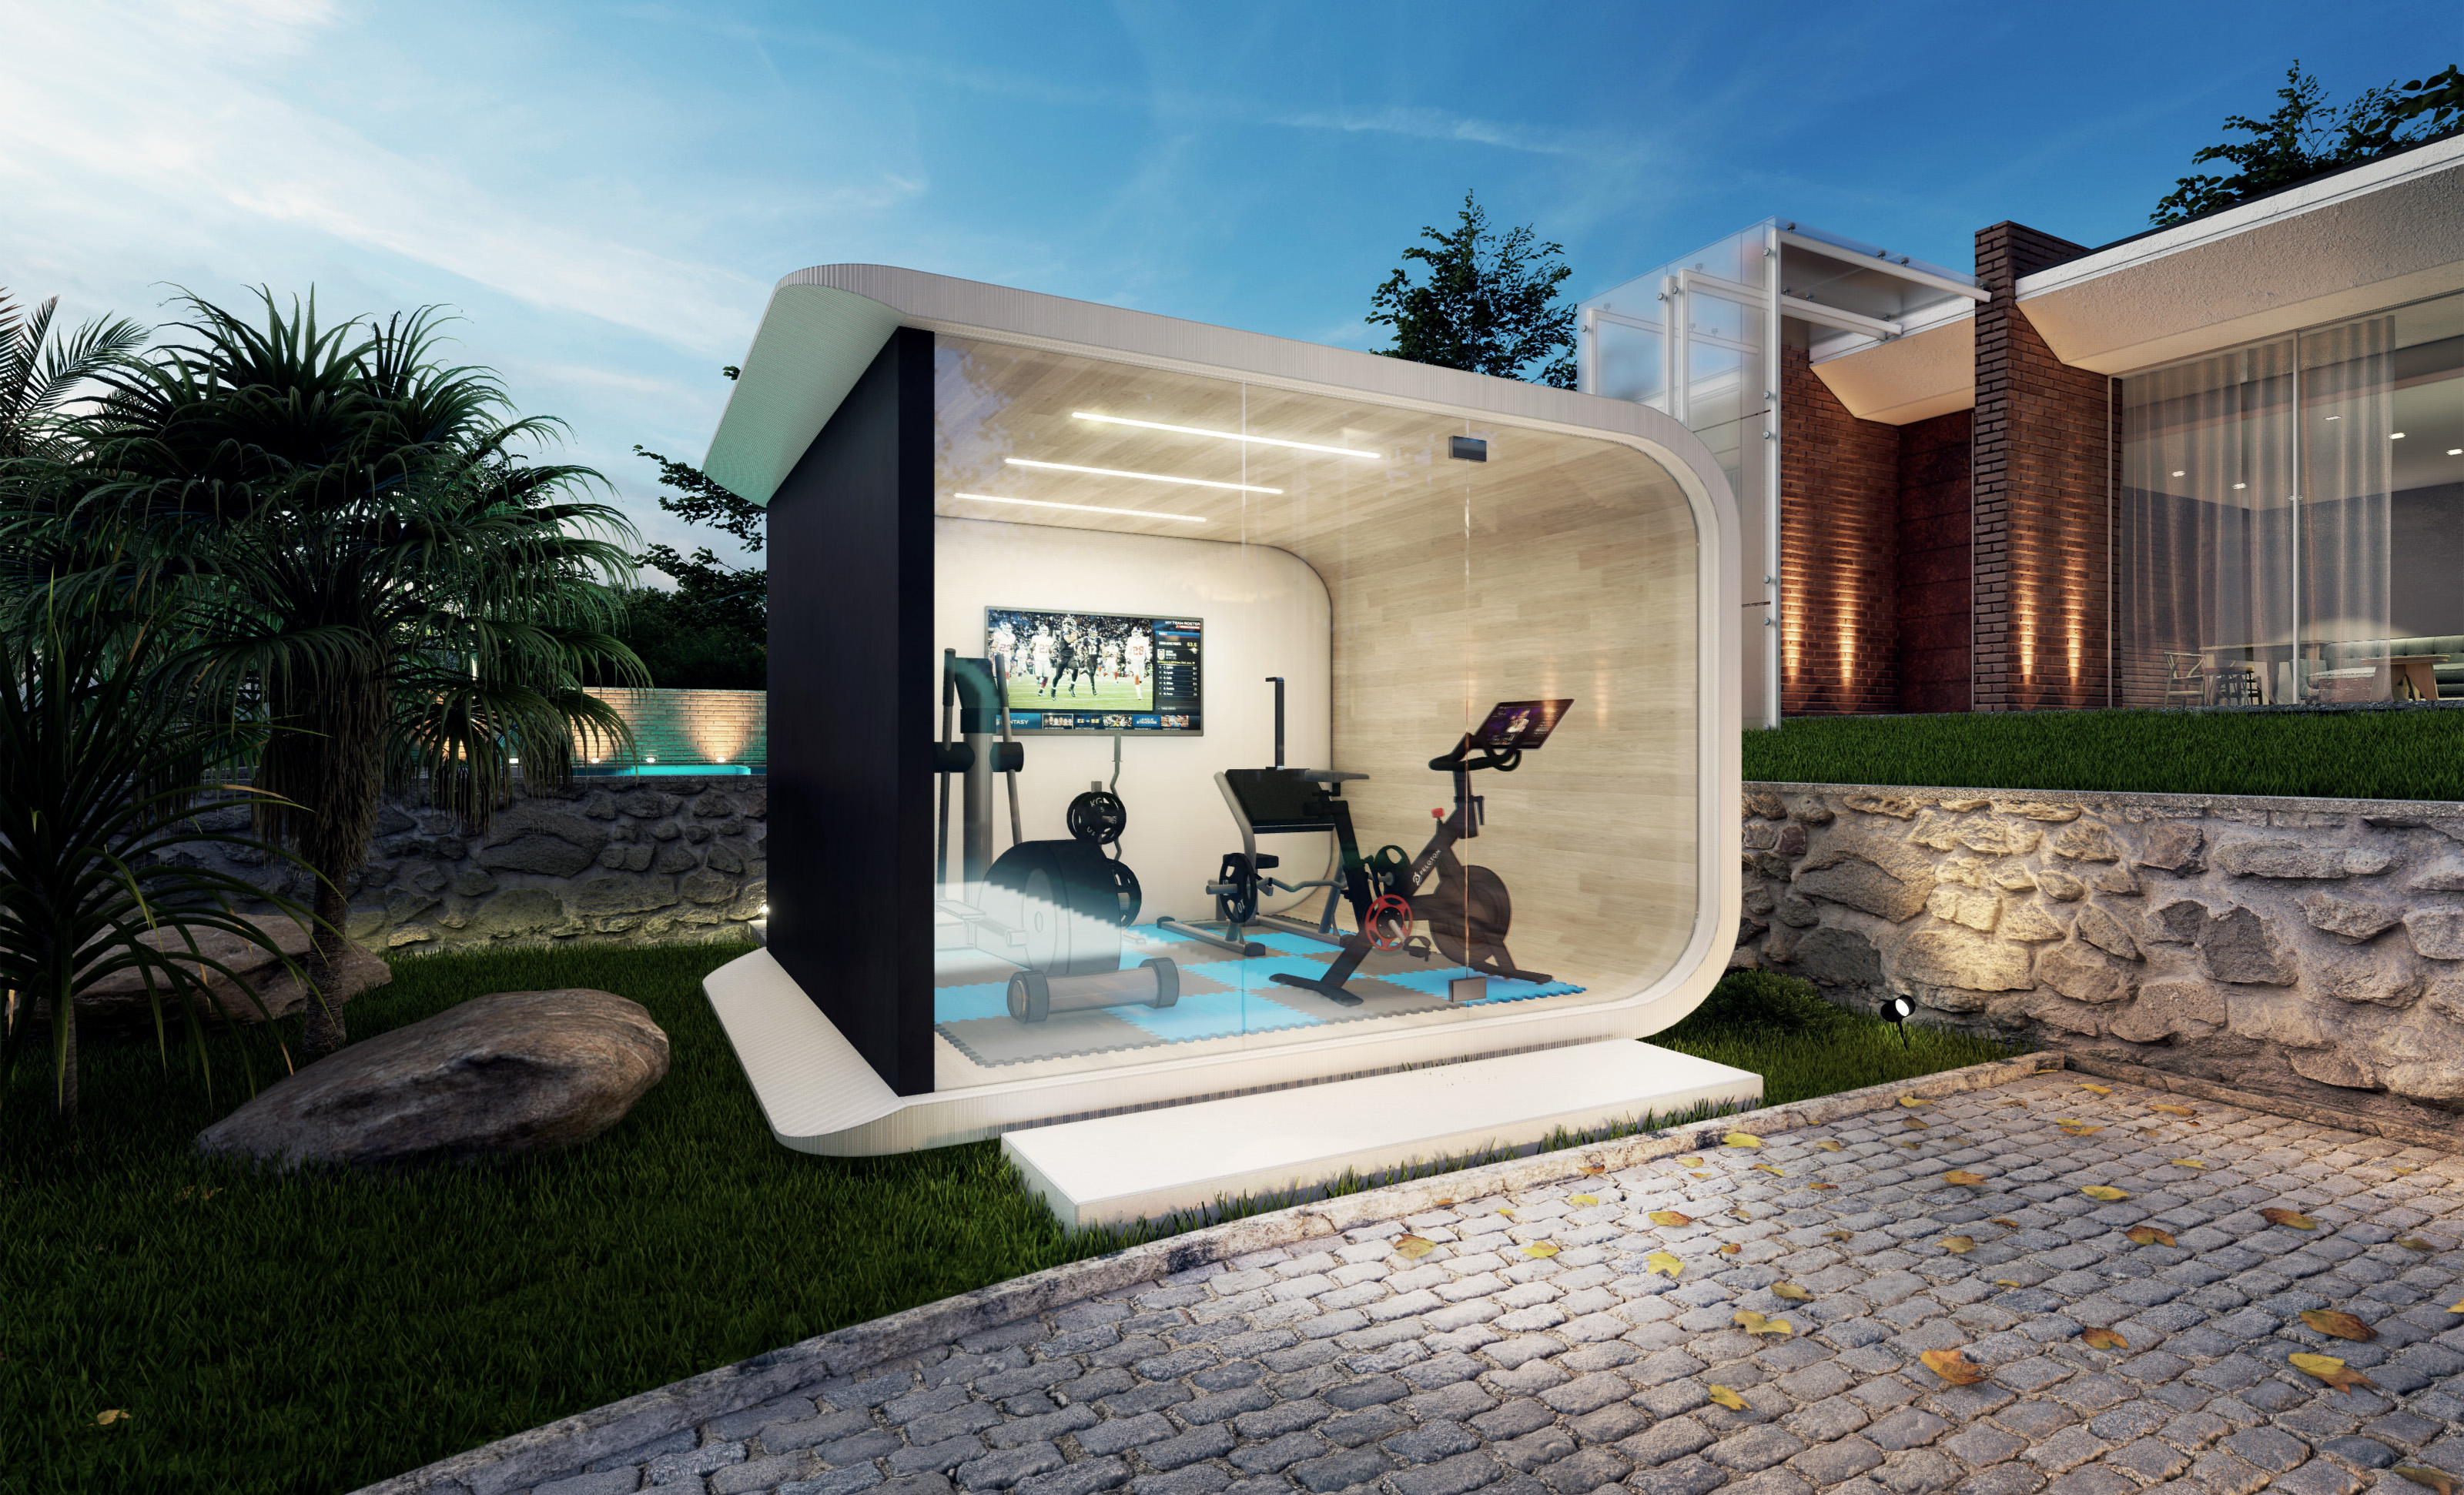 3D printed accessory dwelling unit with backyard gym